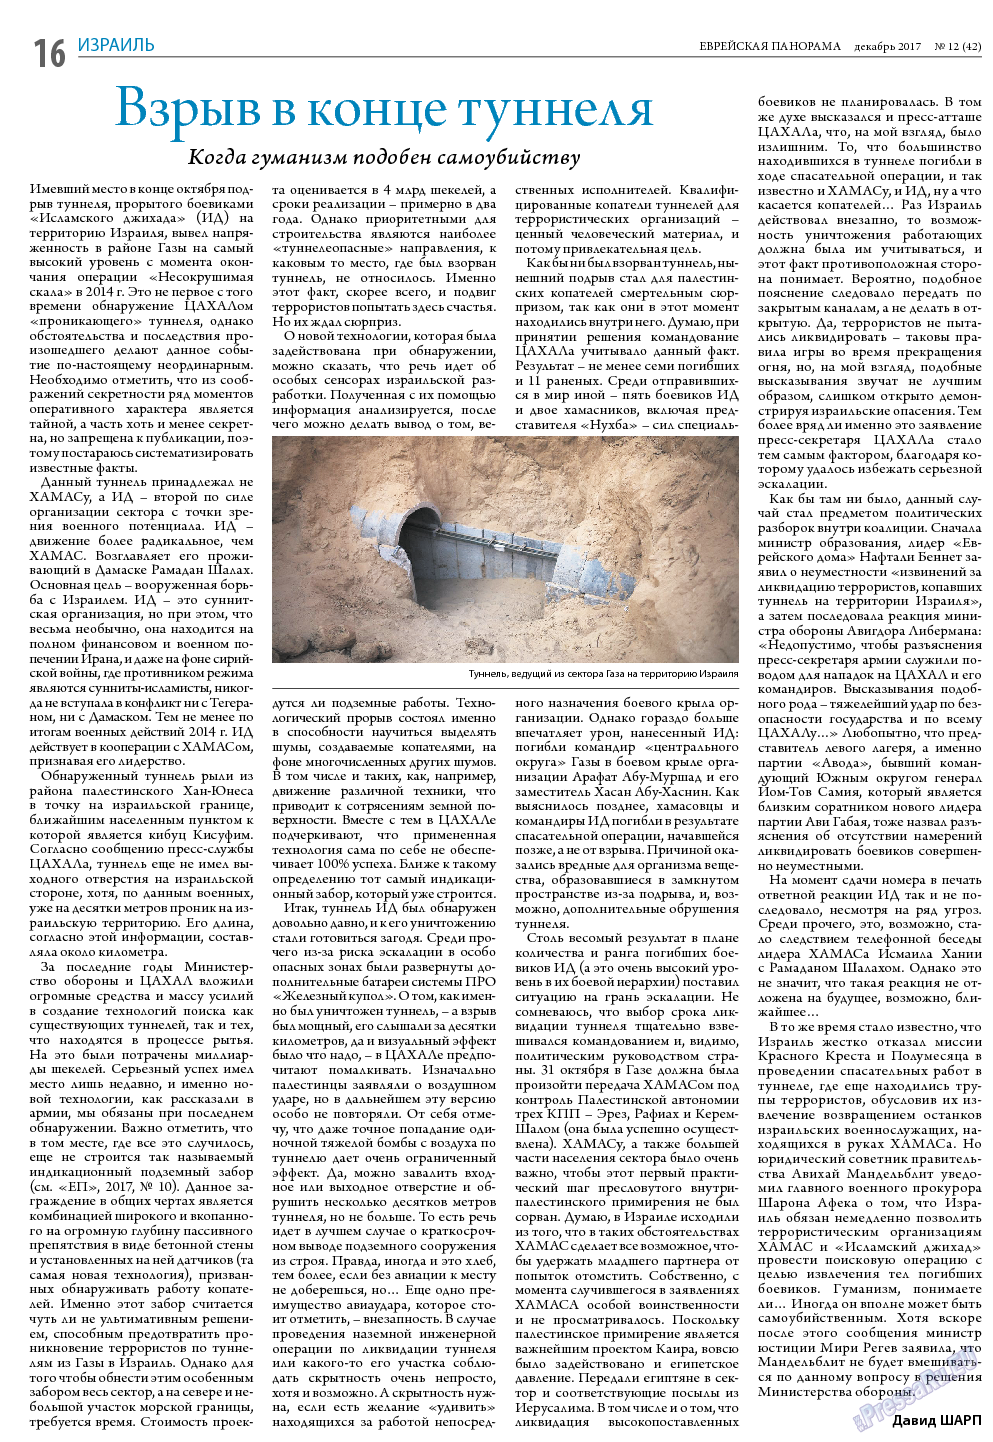 Еврейская панорама, газета. 2017 №12 стр.16